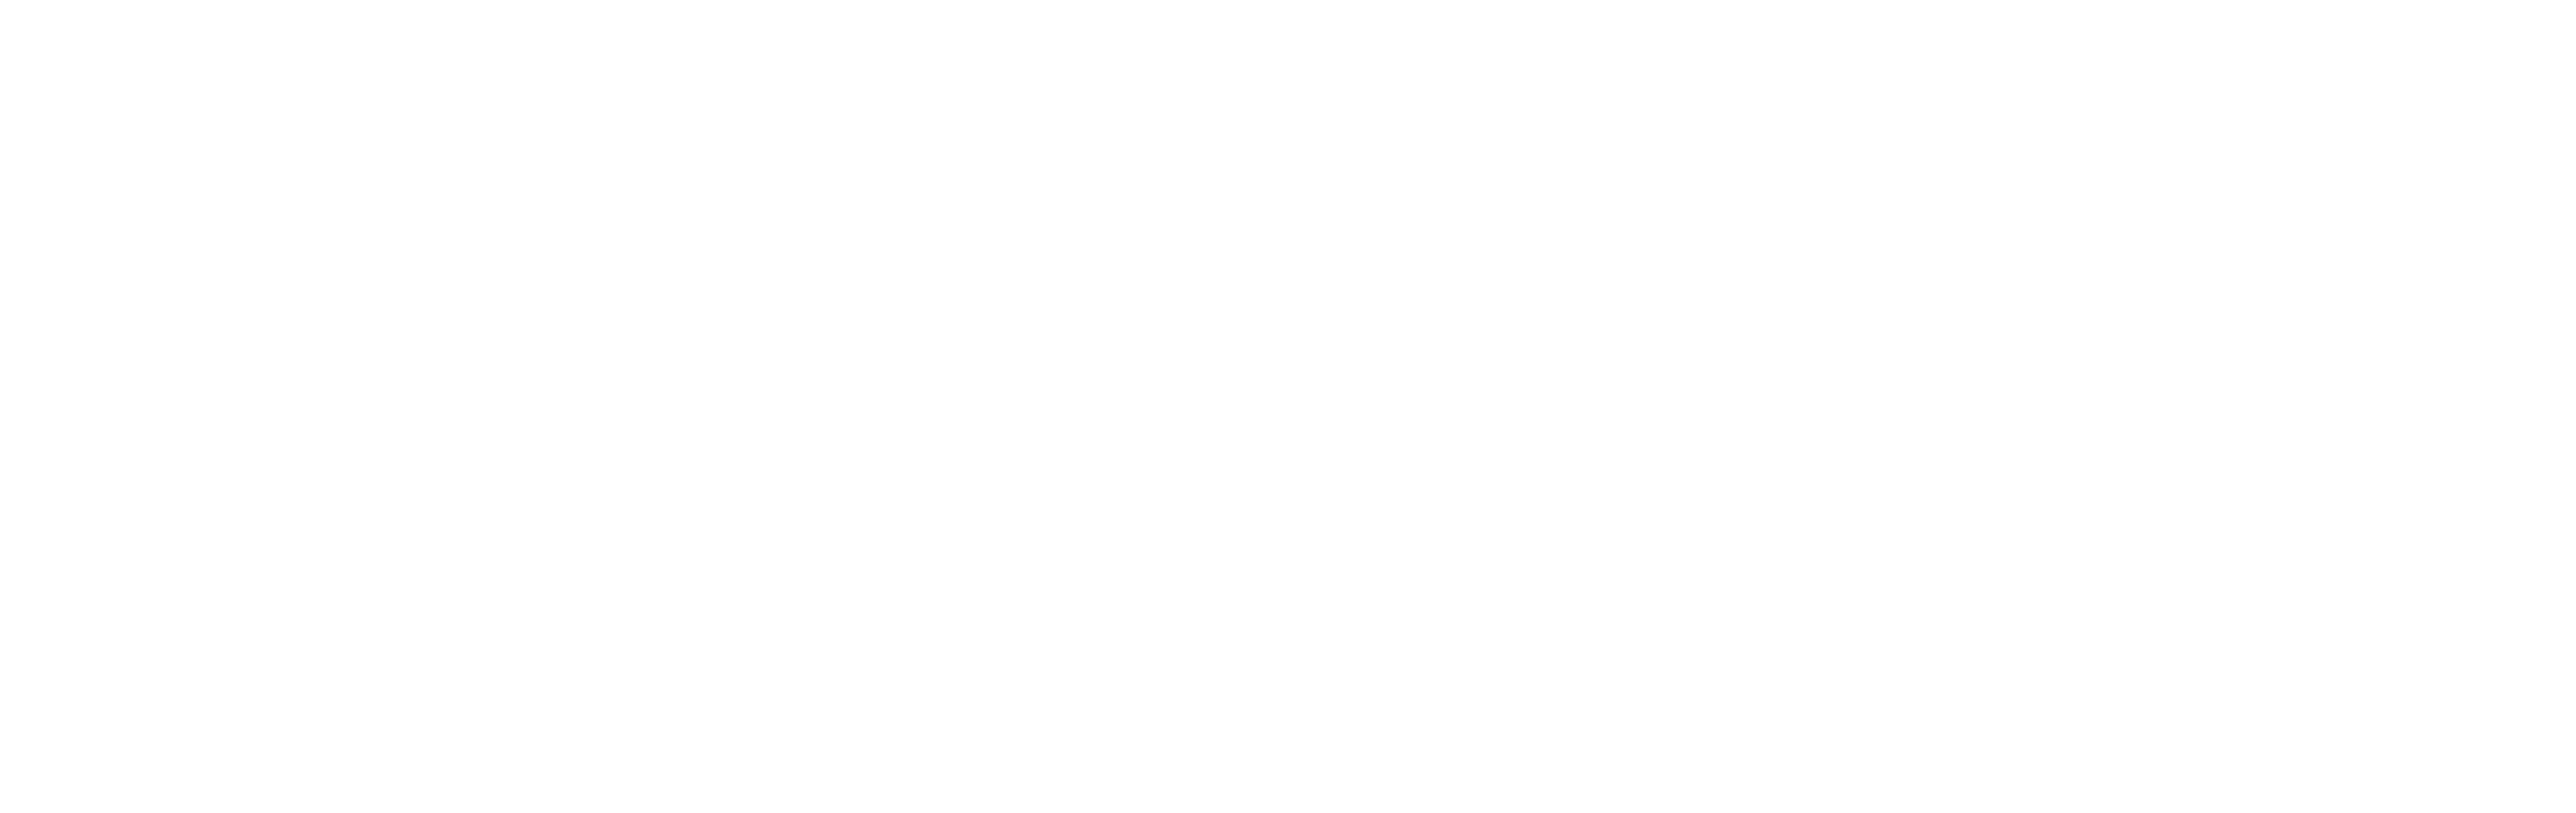 White-central-patternmaking-logo-landscape-rgb-600ppi (1)